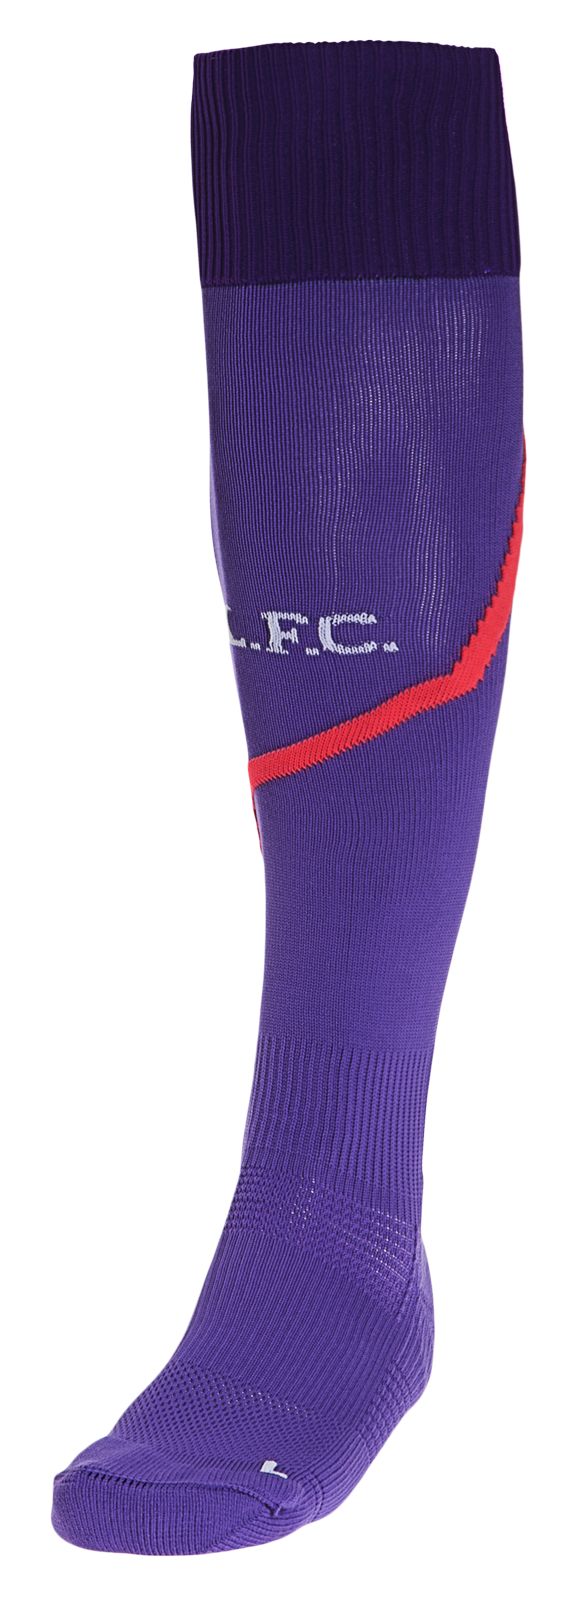 Liverpool Away Goalkeeper Sock 2013/14, Blackberry Cord with Prism Violet & Fluorescent Pink image number 1